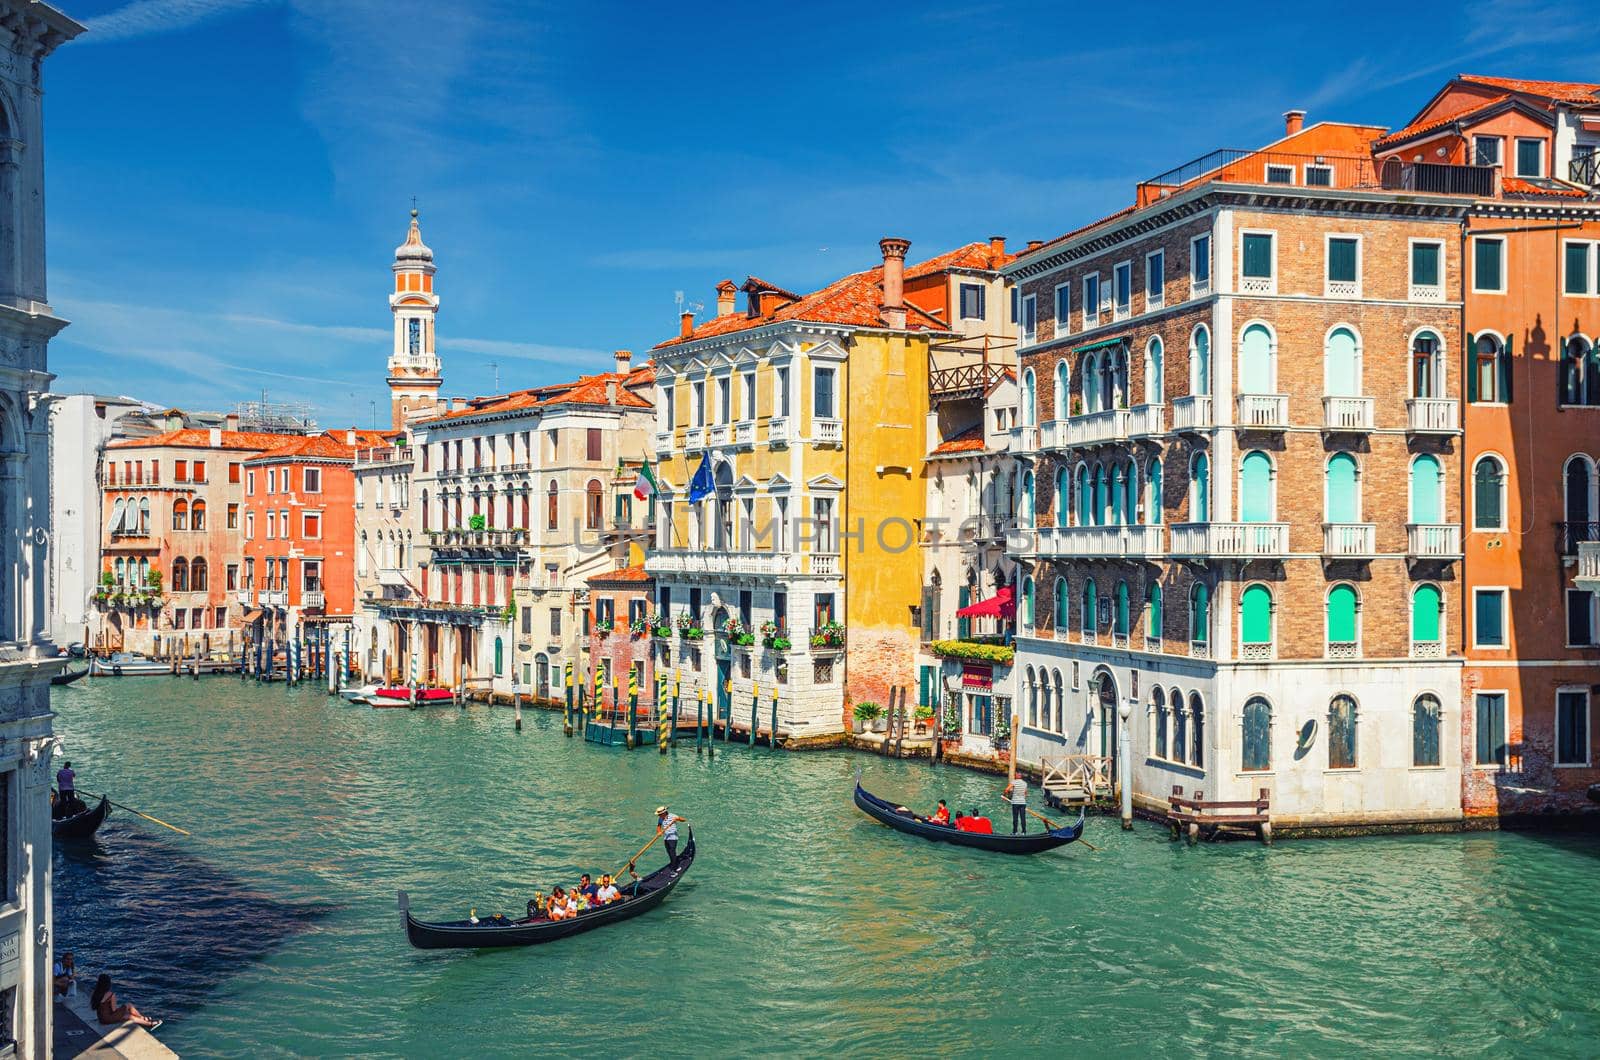 Venice city with Grand Canal by Aliaksandr_Antanovich